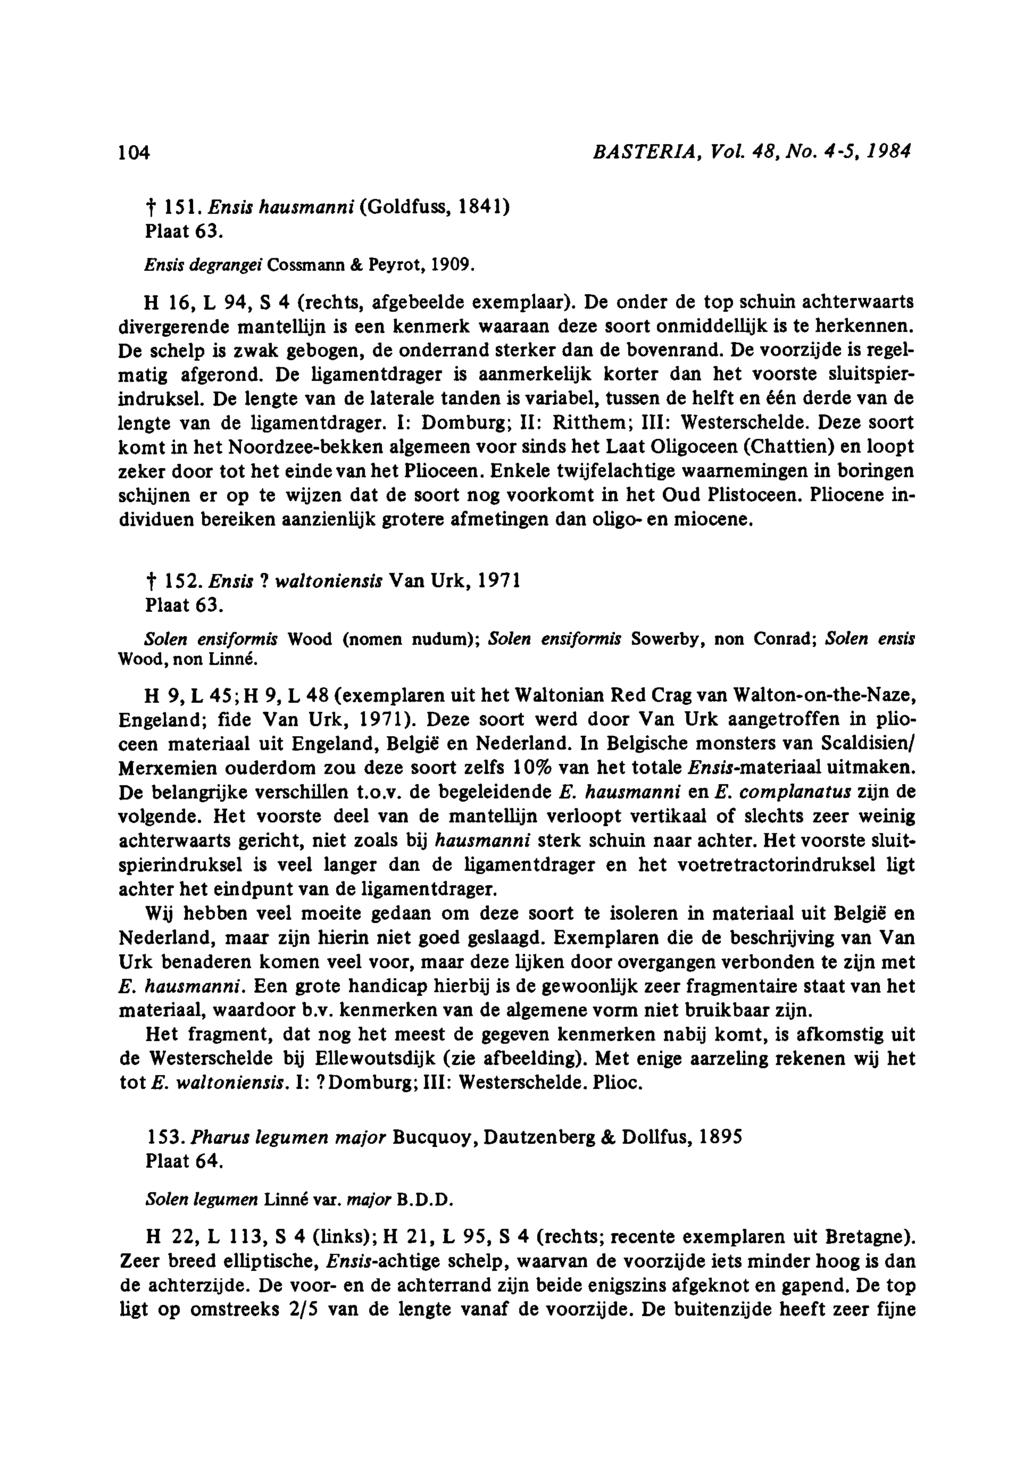 104 BASTERIA, Vol. 48, No. 45, 1984 151. Ensis hausmanni(goldfuss, 1841) Plaat 63. Ensis degrangeicossmann & Peyrot, 1909 H 16, L 94, S 4 (rechts, afgebeelde exemplaar).